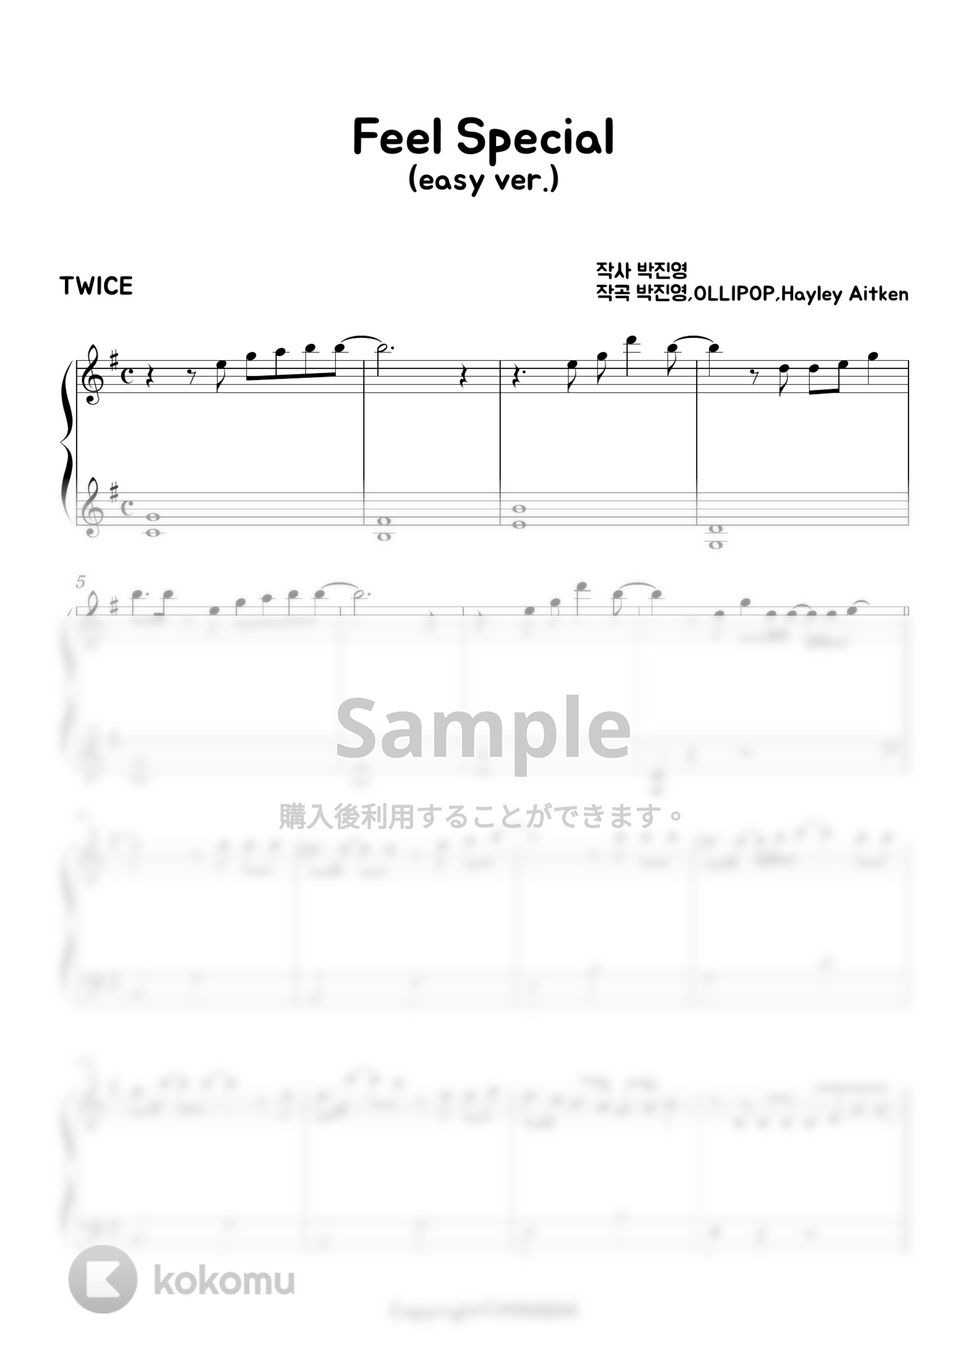 Twice - Feel Special (Easy ver.) by MINIBINI